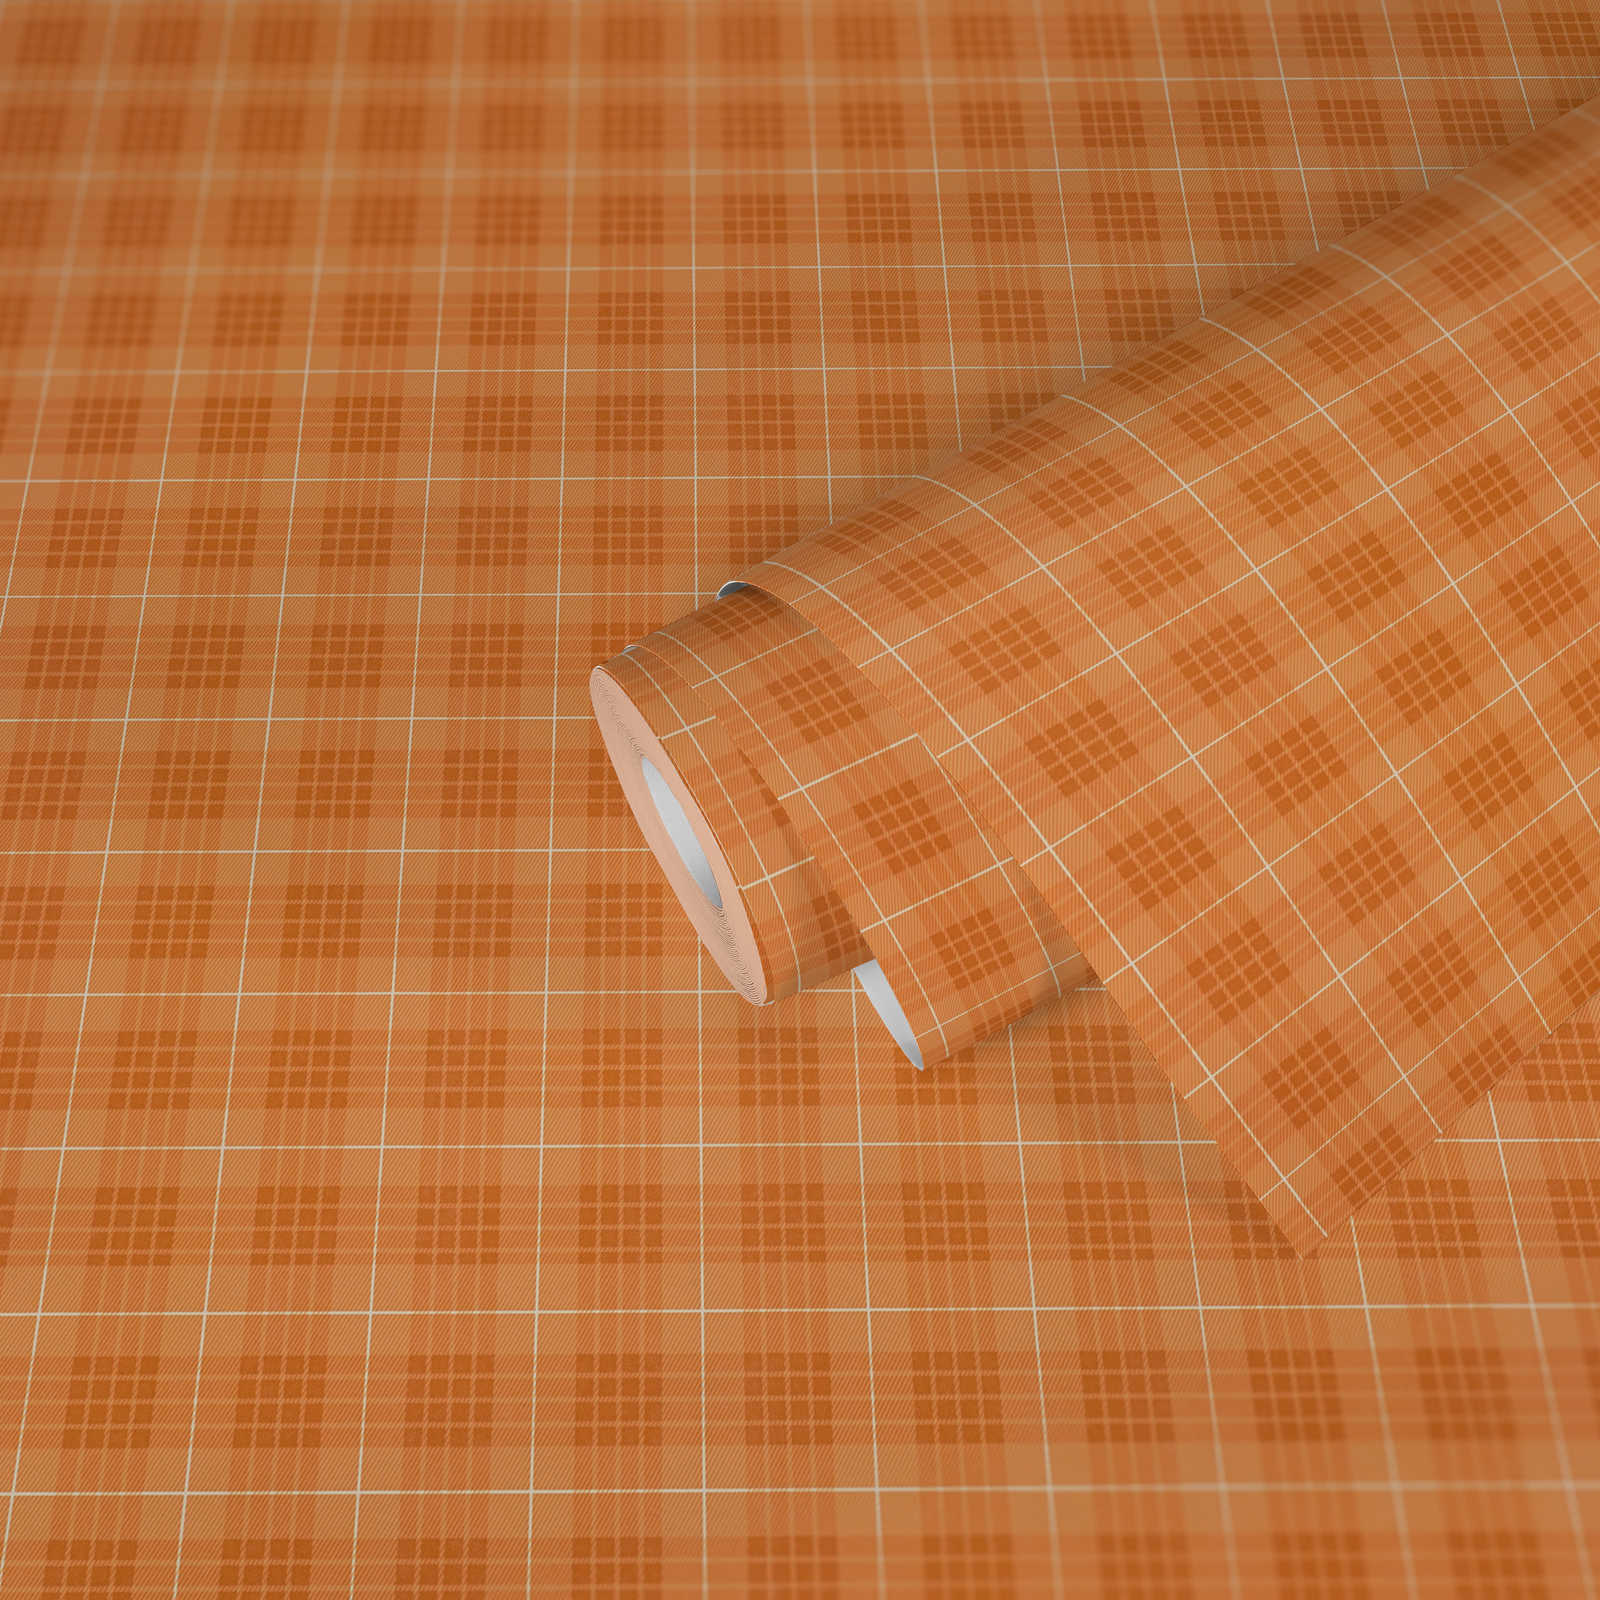             Textile-look wallpaper plaid flannel look - orange, white
        